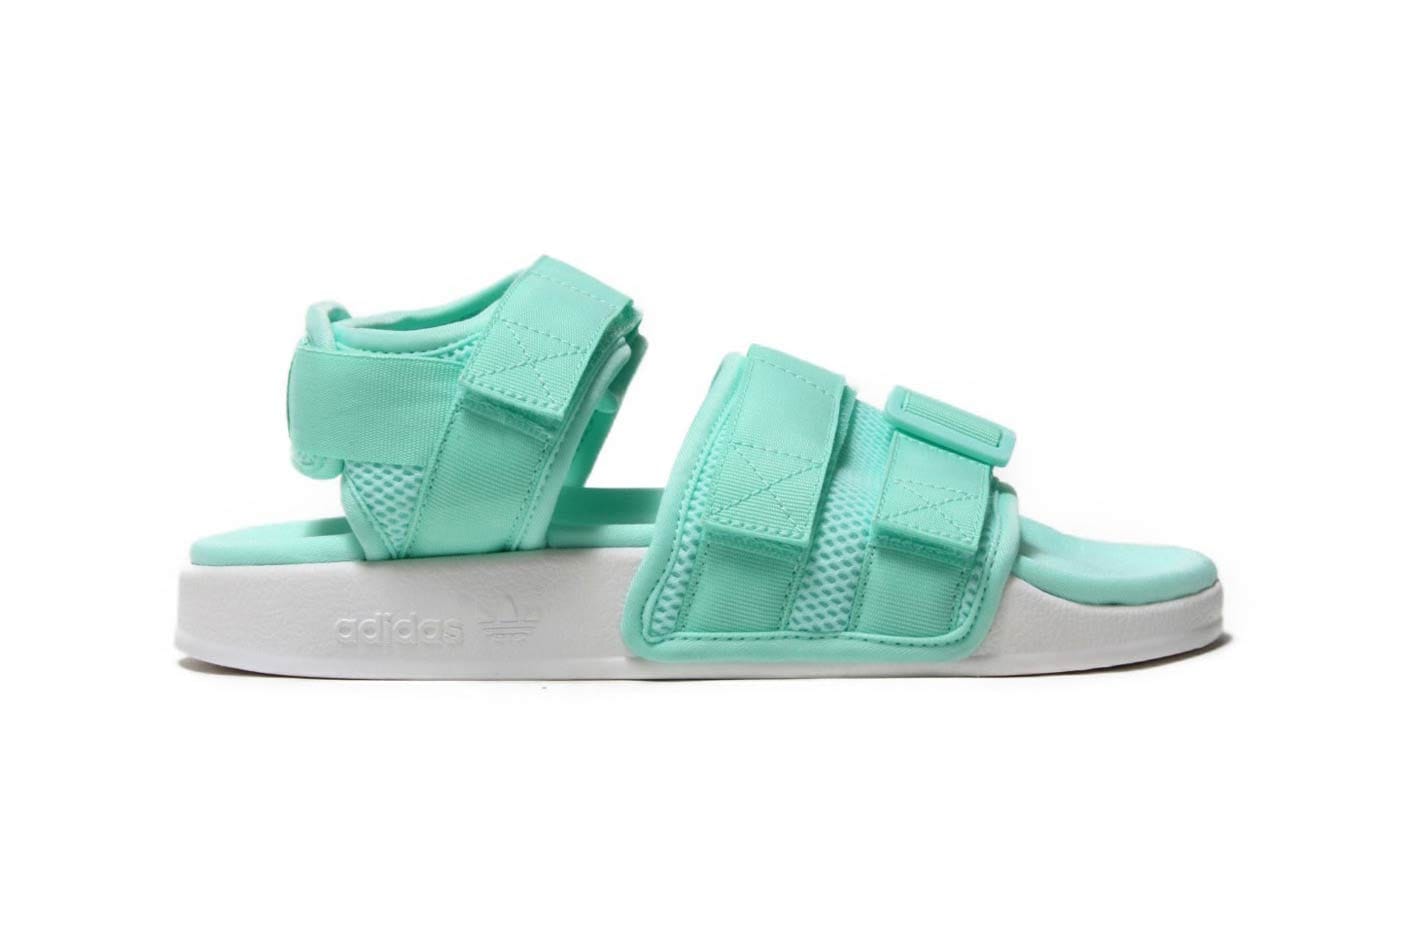 adidas adilette strappy sandals